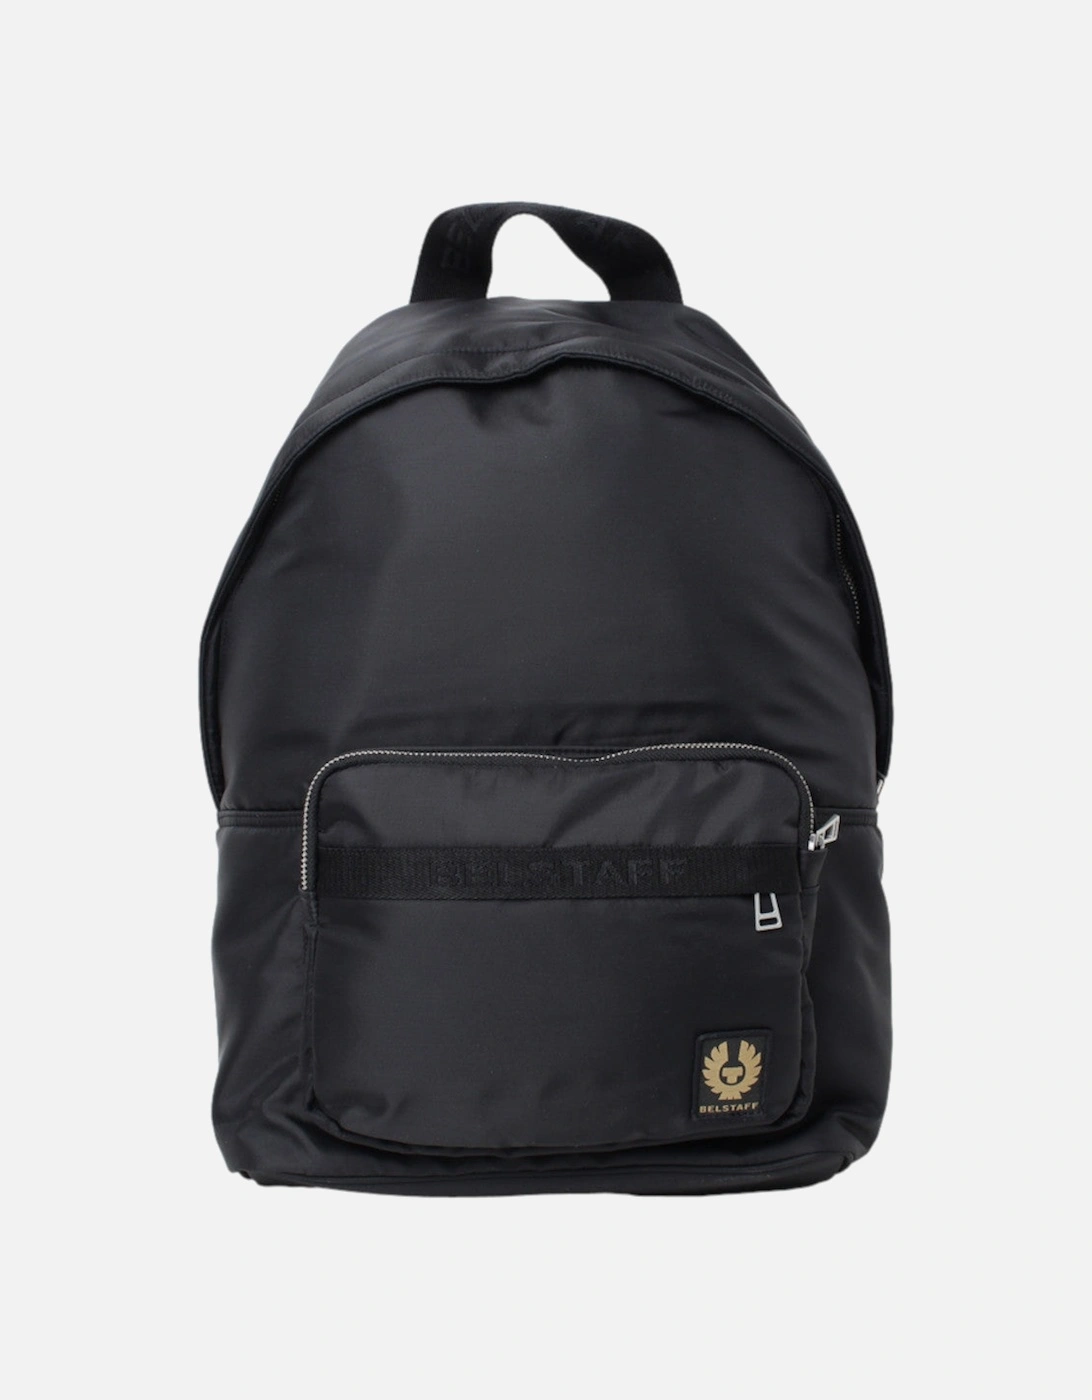 Urban Backpack Black, 3 of 2